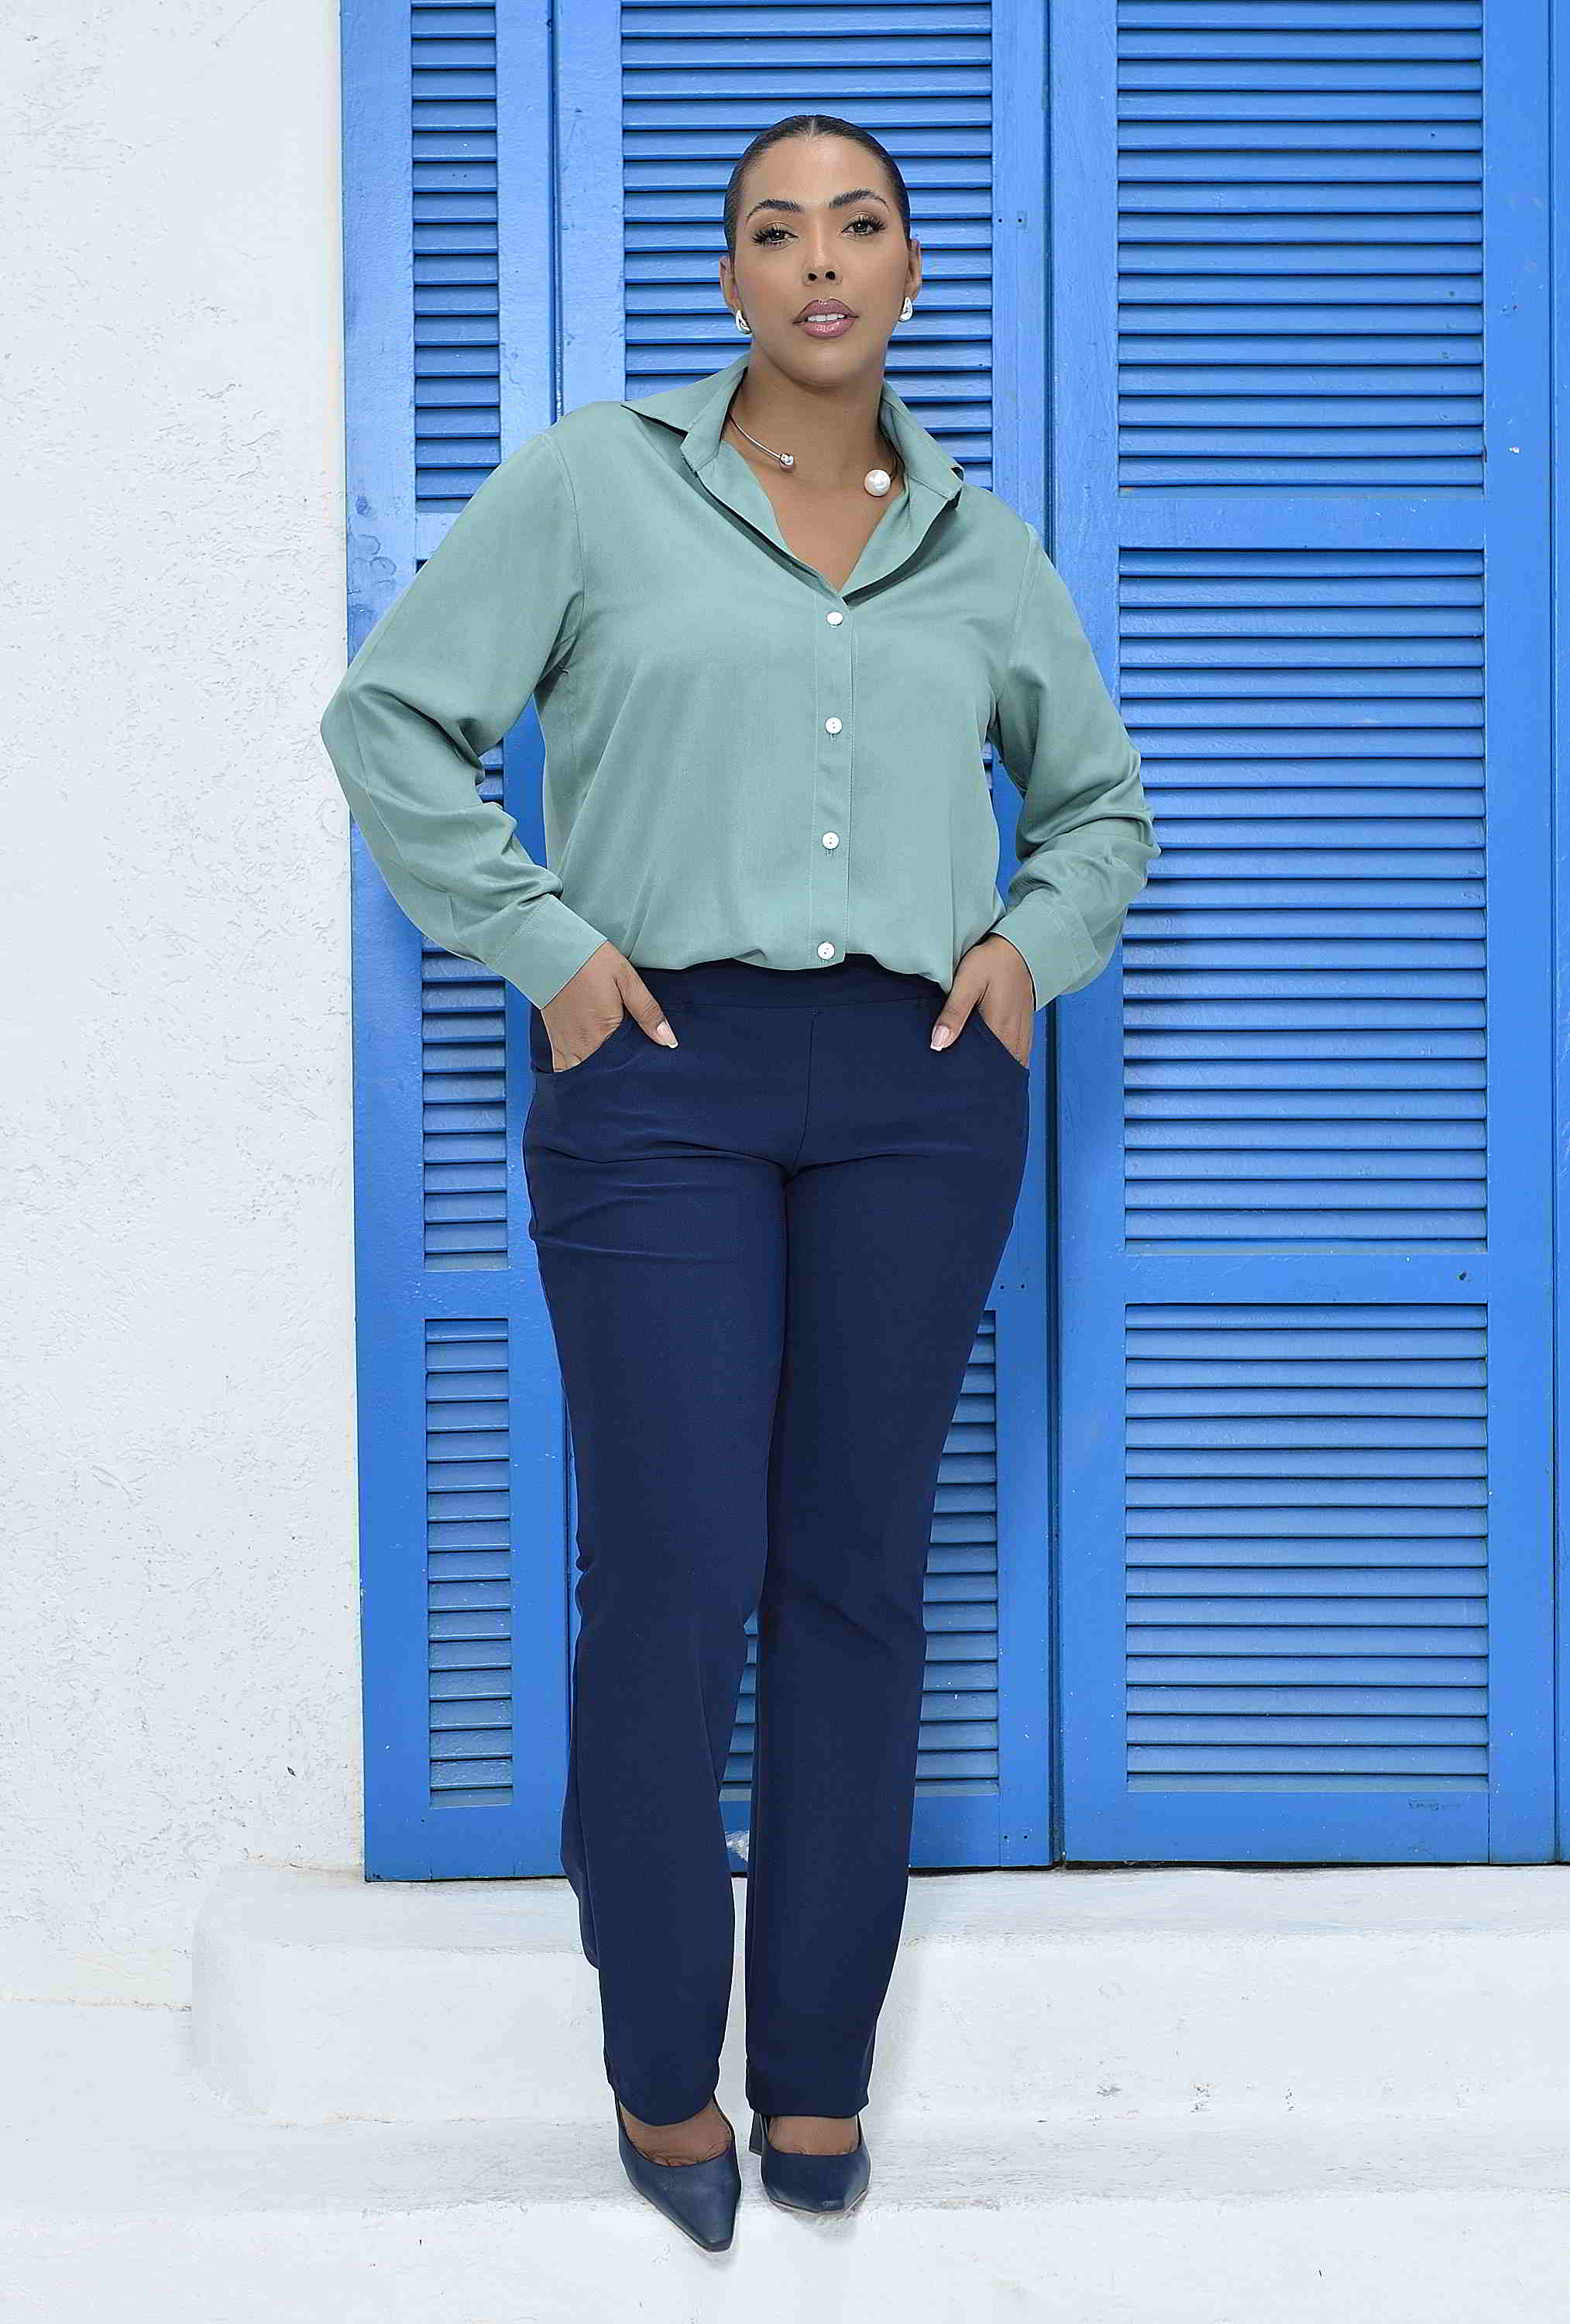 Blusa Plus Size Bella - Coringa para Compor Looks Básicos e Casuais - Mania  Brasil